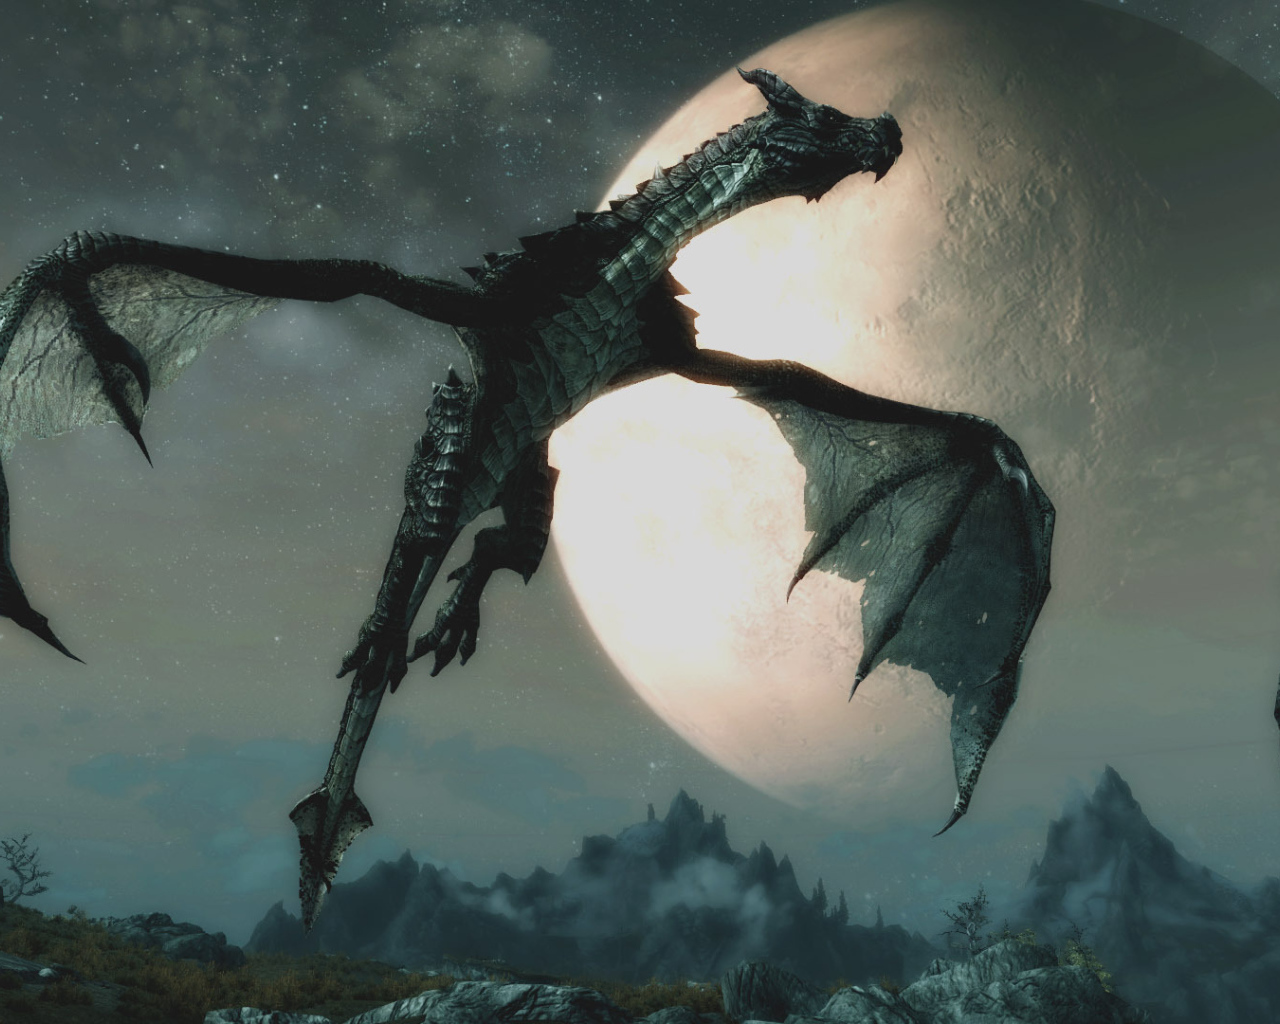 Dragon flies under the big moon